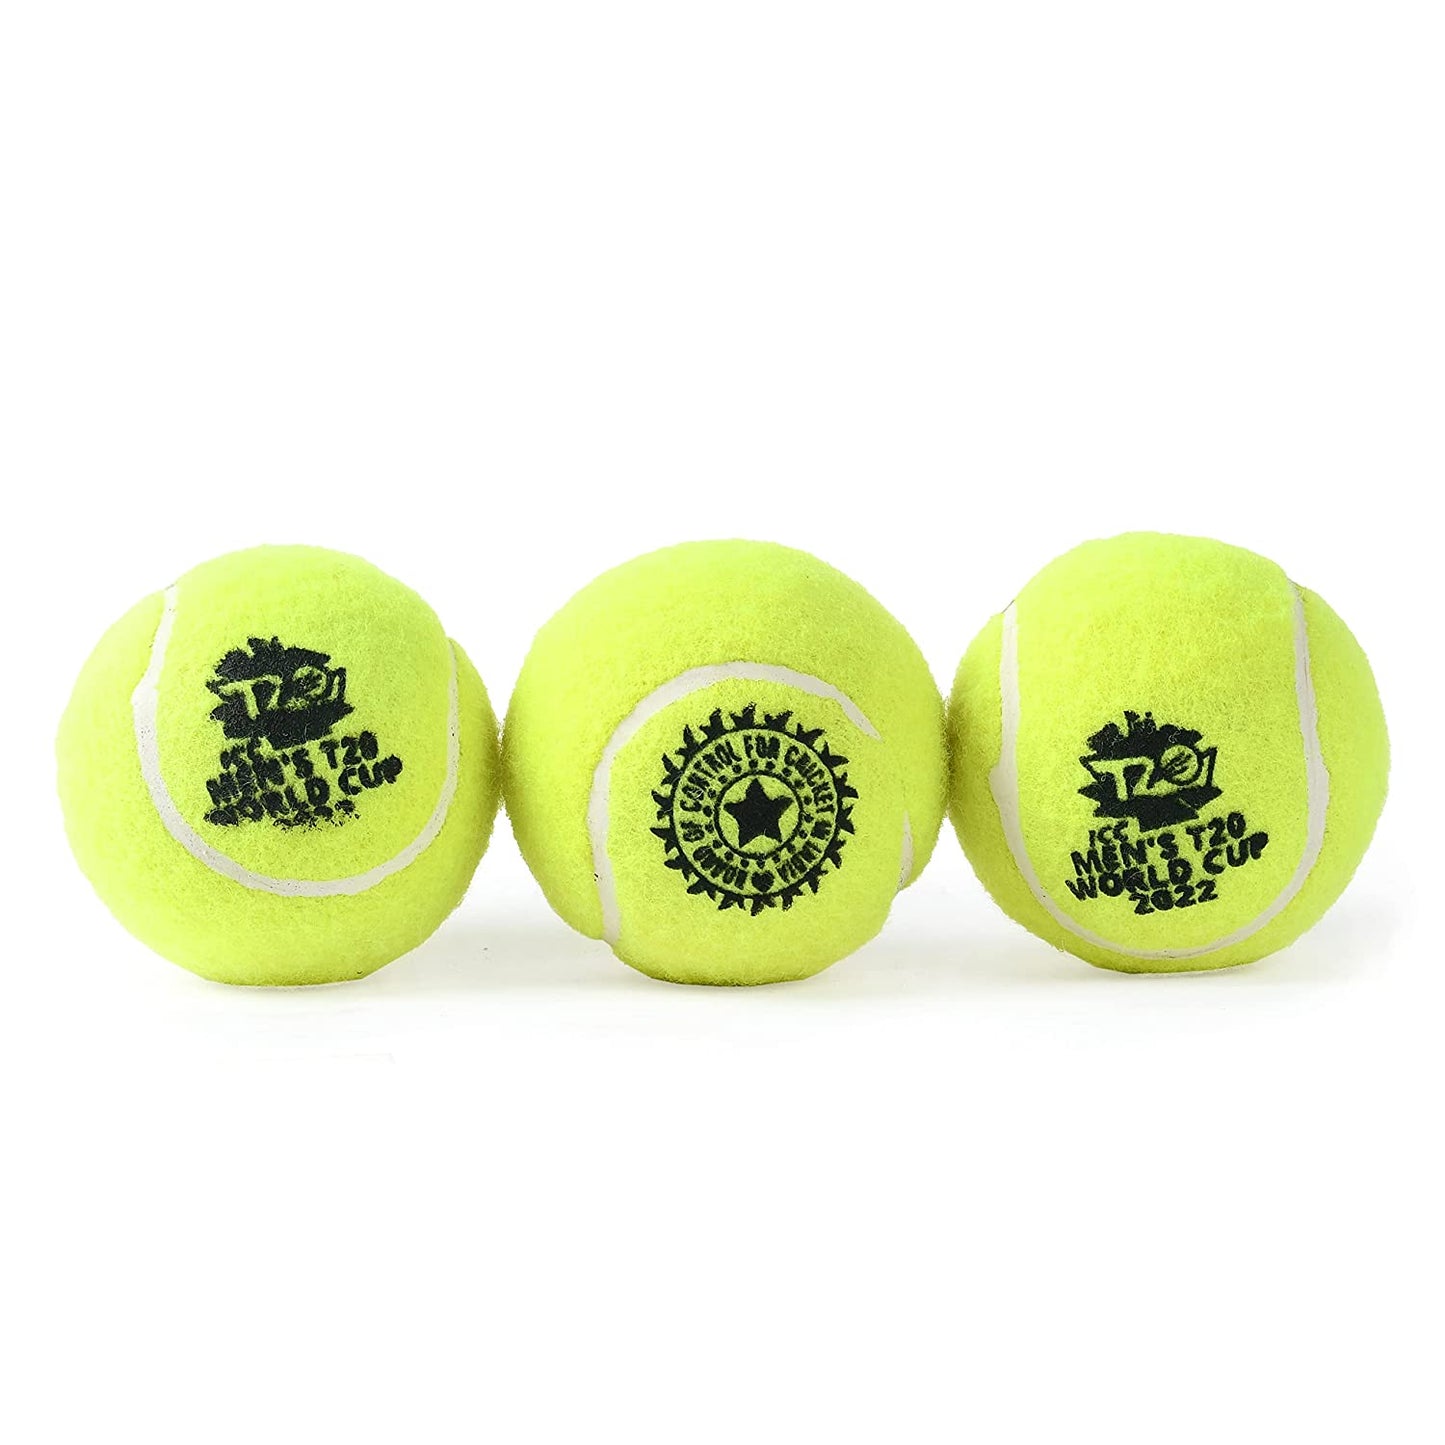 Playr Bounce Turf Balls, Yellow - Best Price online Prokicksports.com